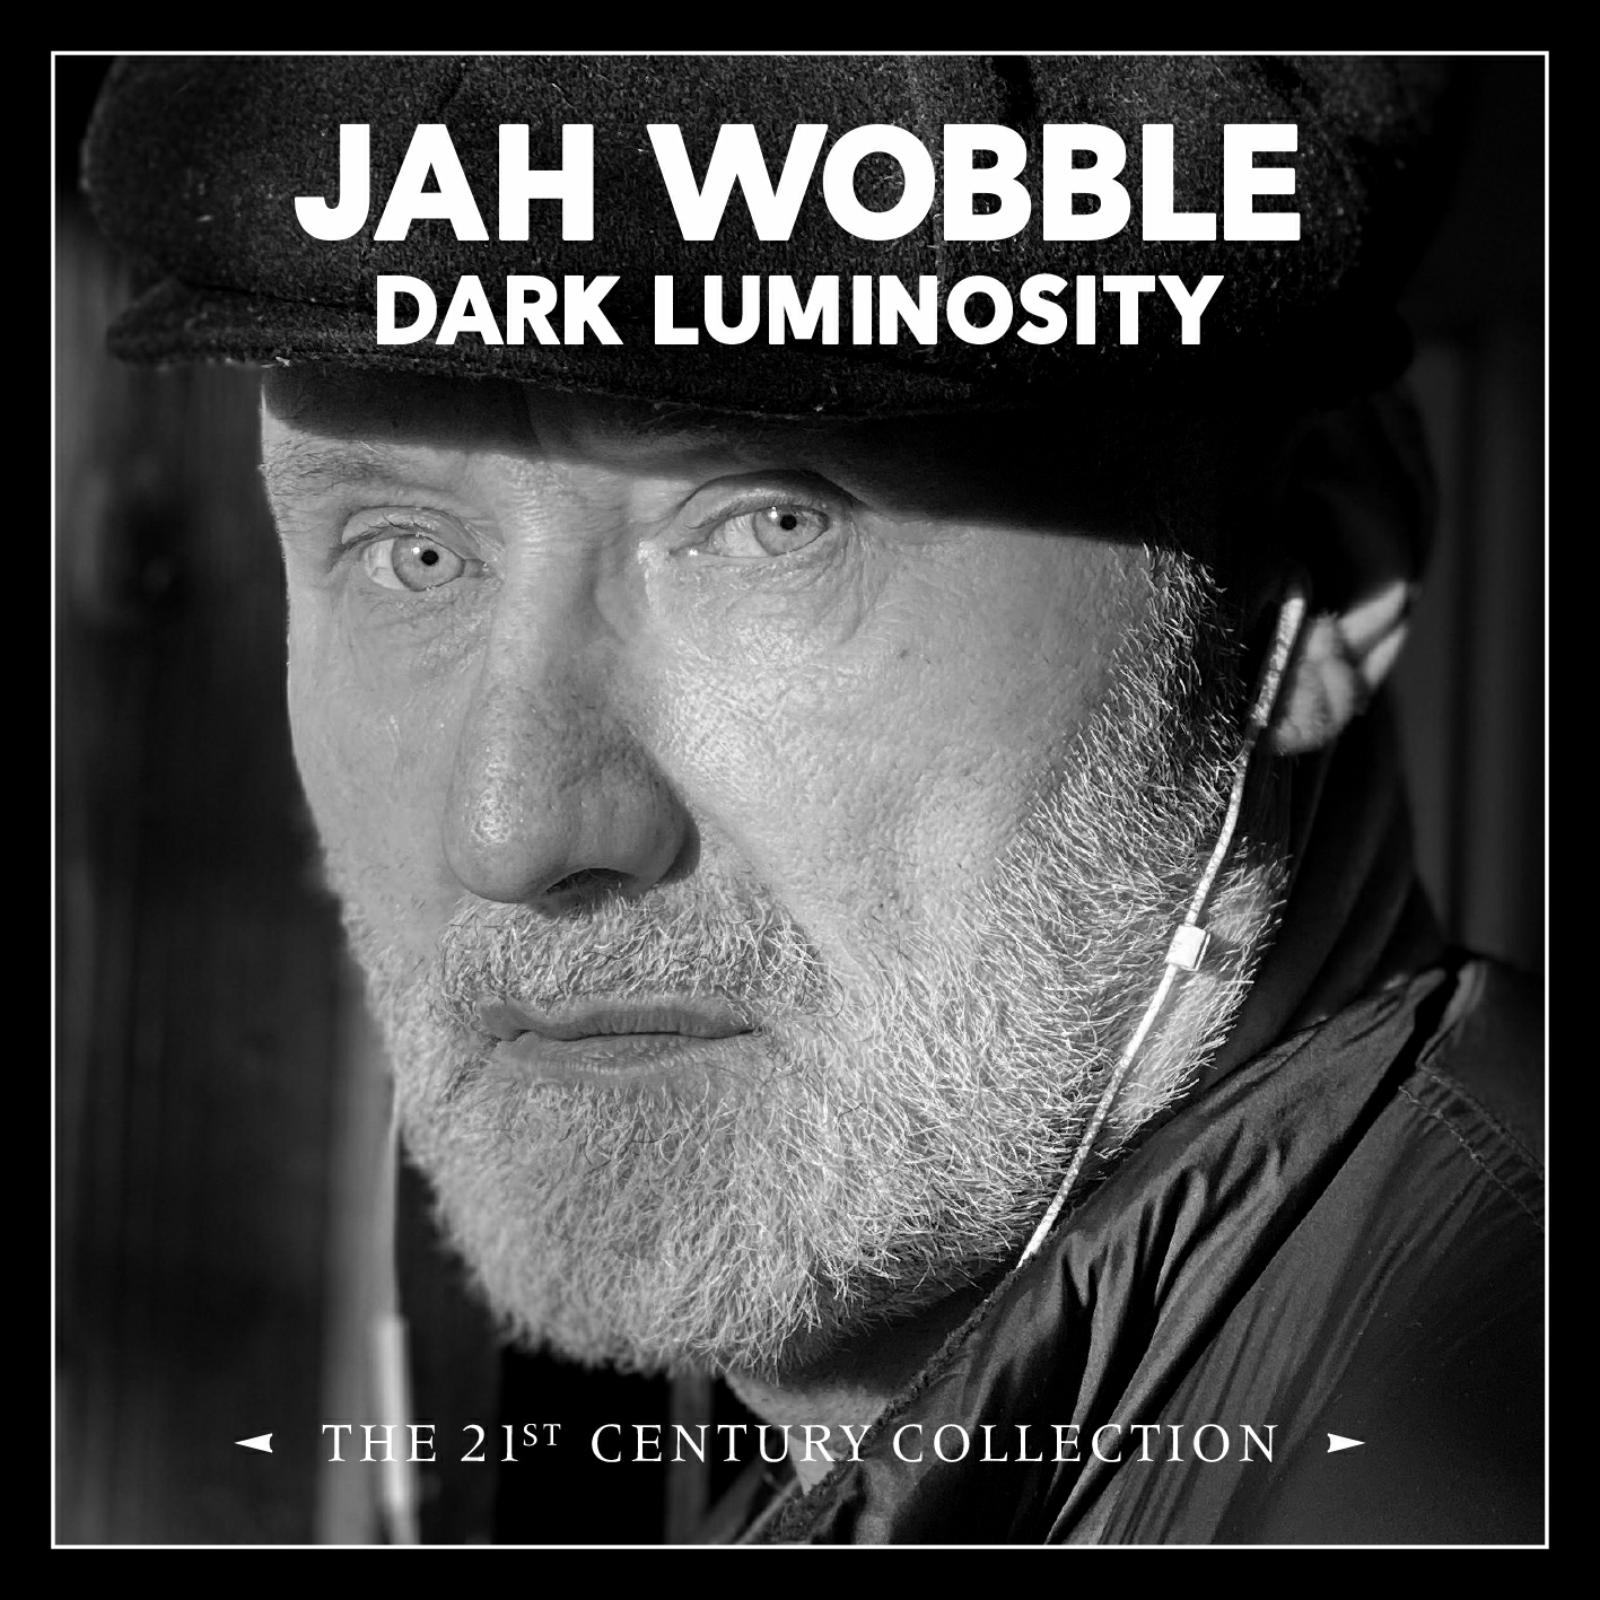 JAH WOBBLE: DARK LUMINOSITY - THE 21ST CENTURY COLLECTION – Proper